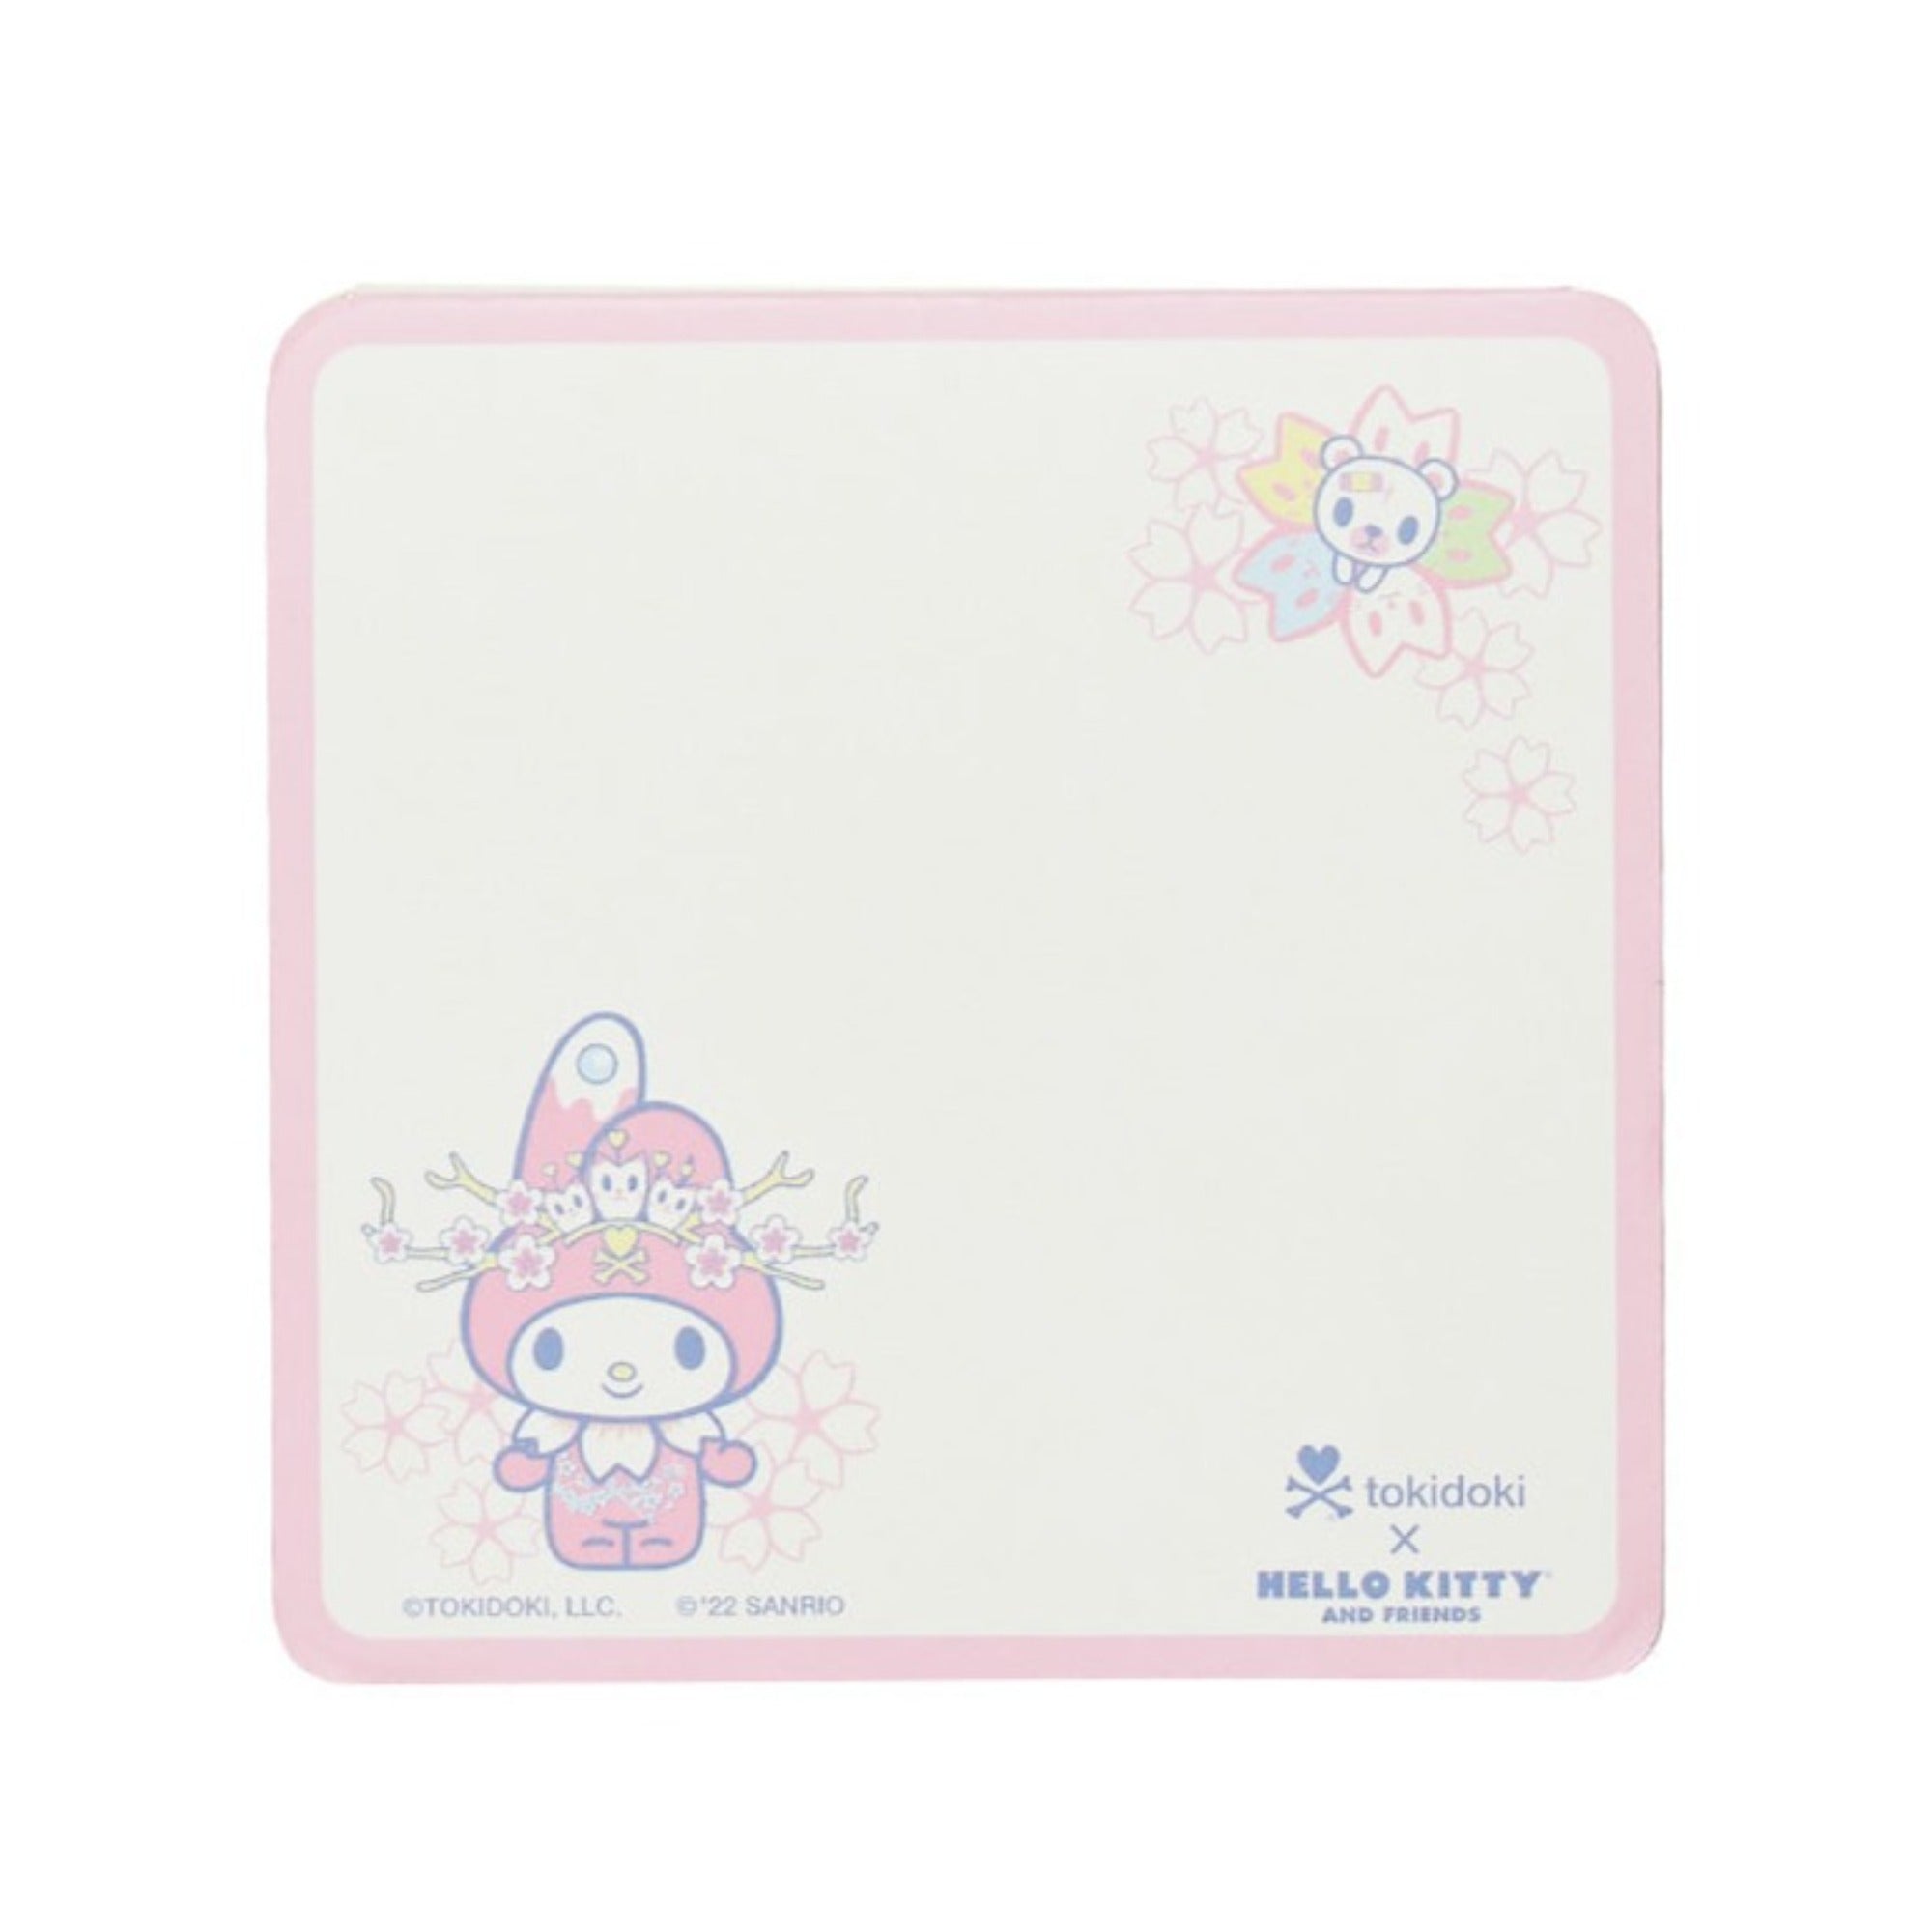 Tokidoki x Hello Kitty and Friends x My Melody Sticky Notes Stationery TOKIDOKI   